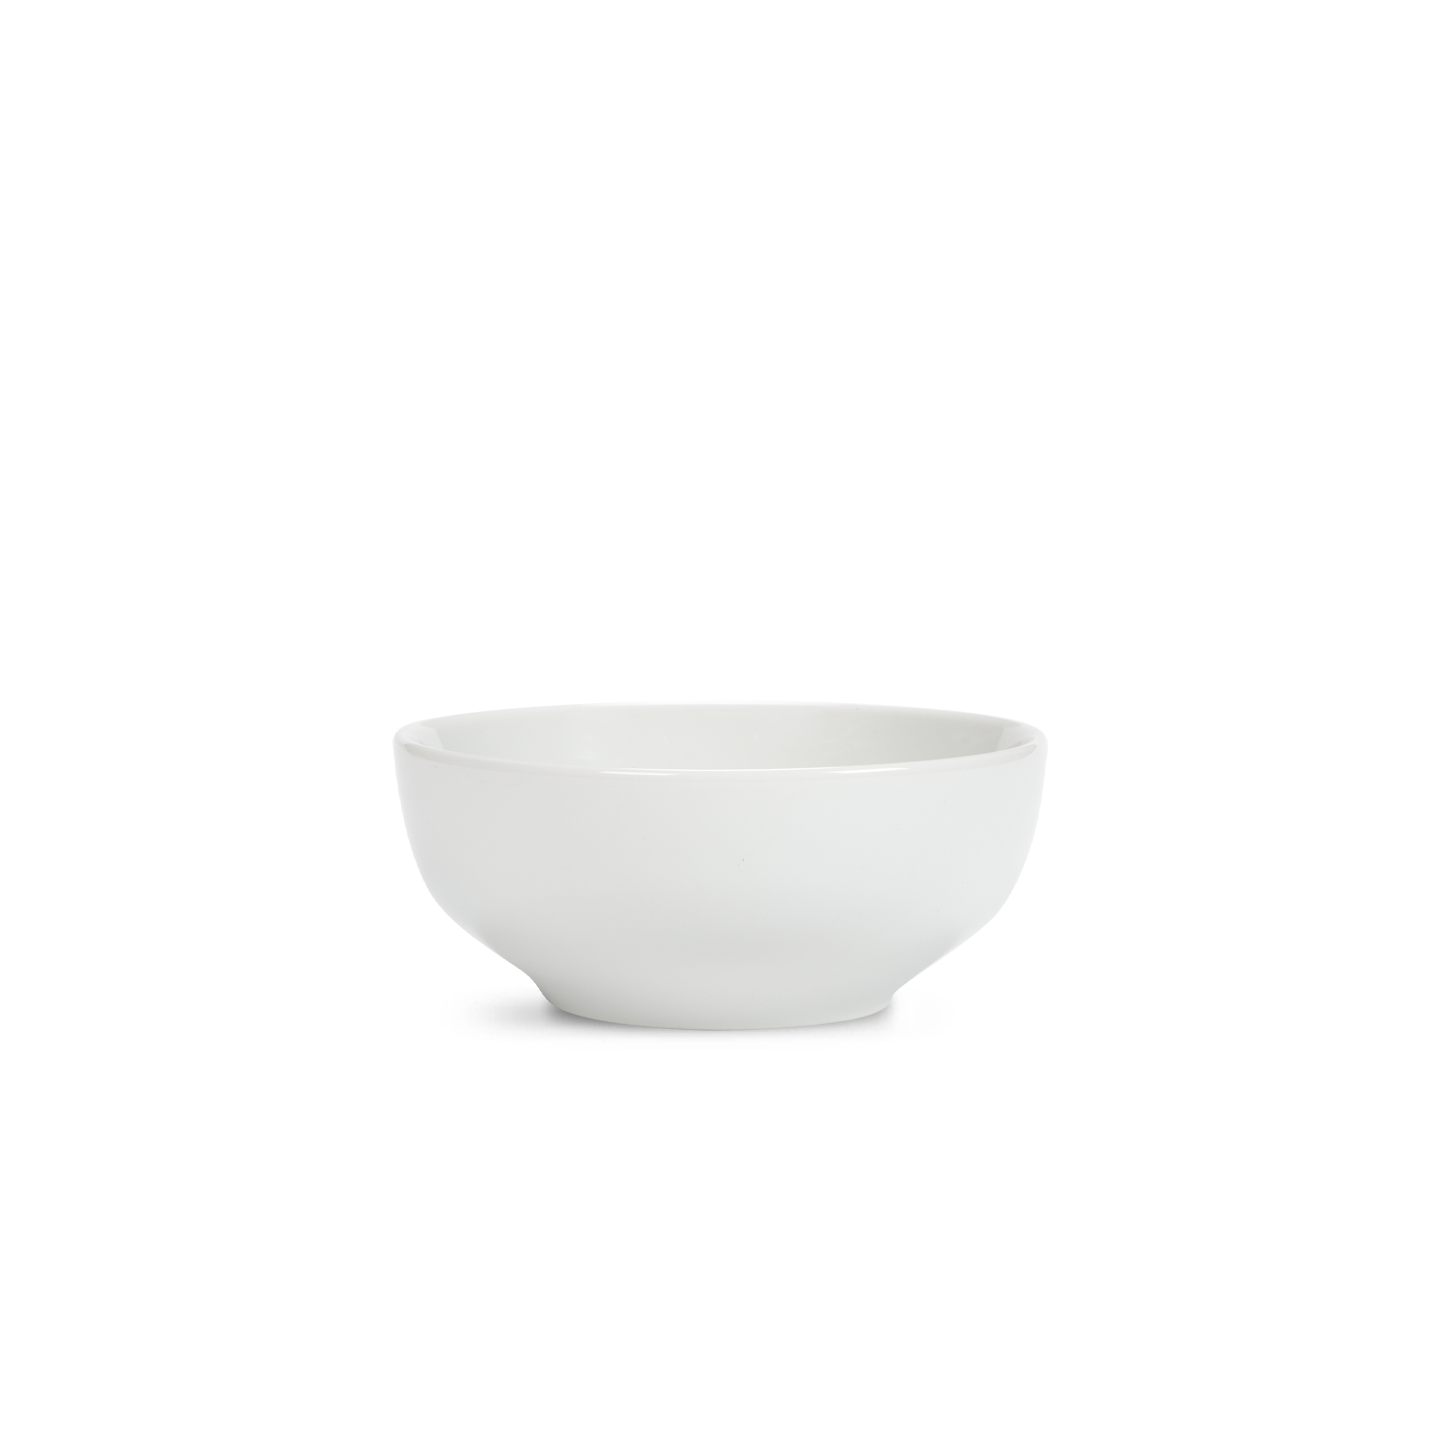 Pillivuyt Sancerre Bowl, Small - White - 6 in., 14 oz.